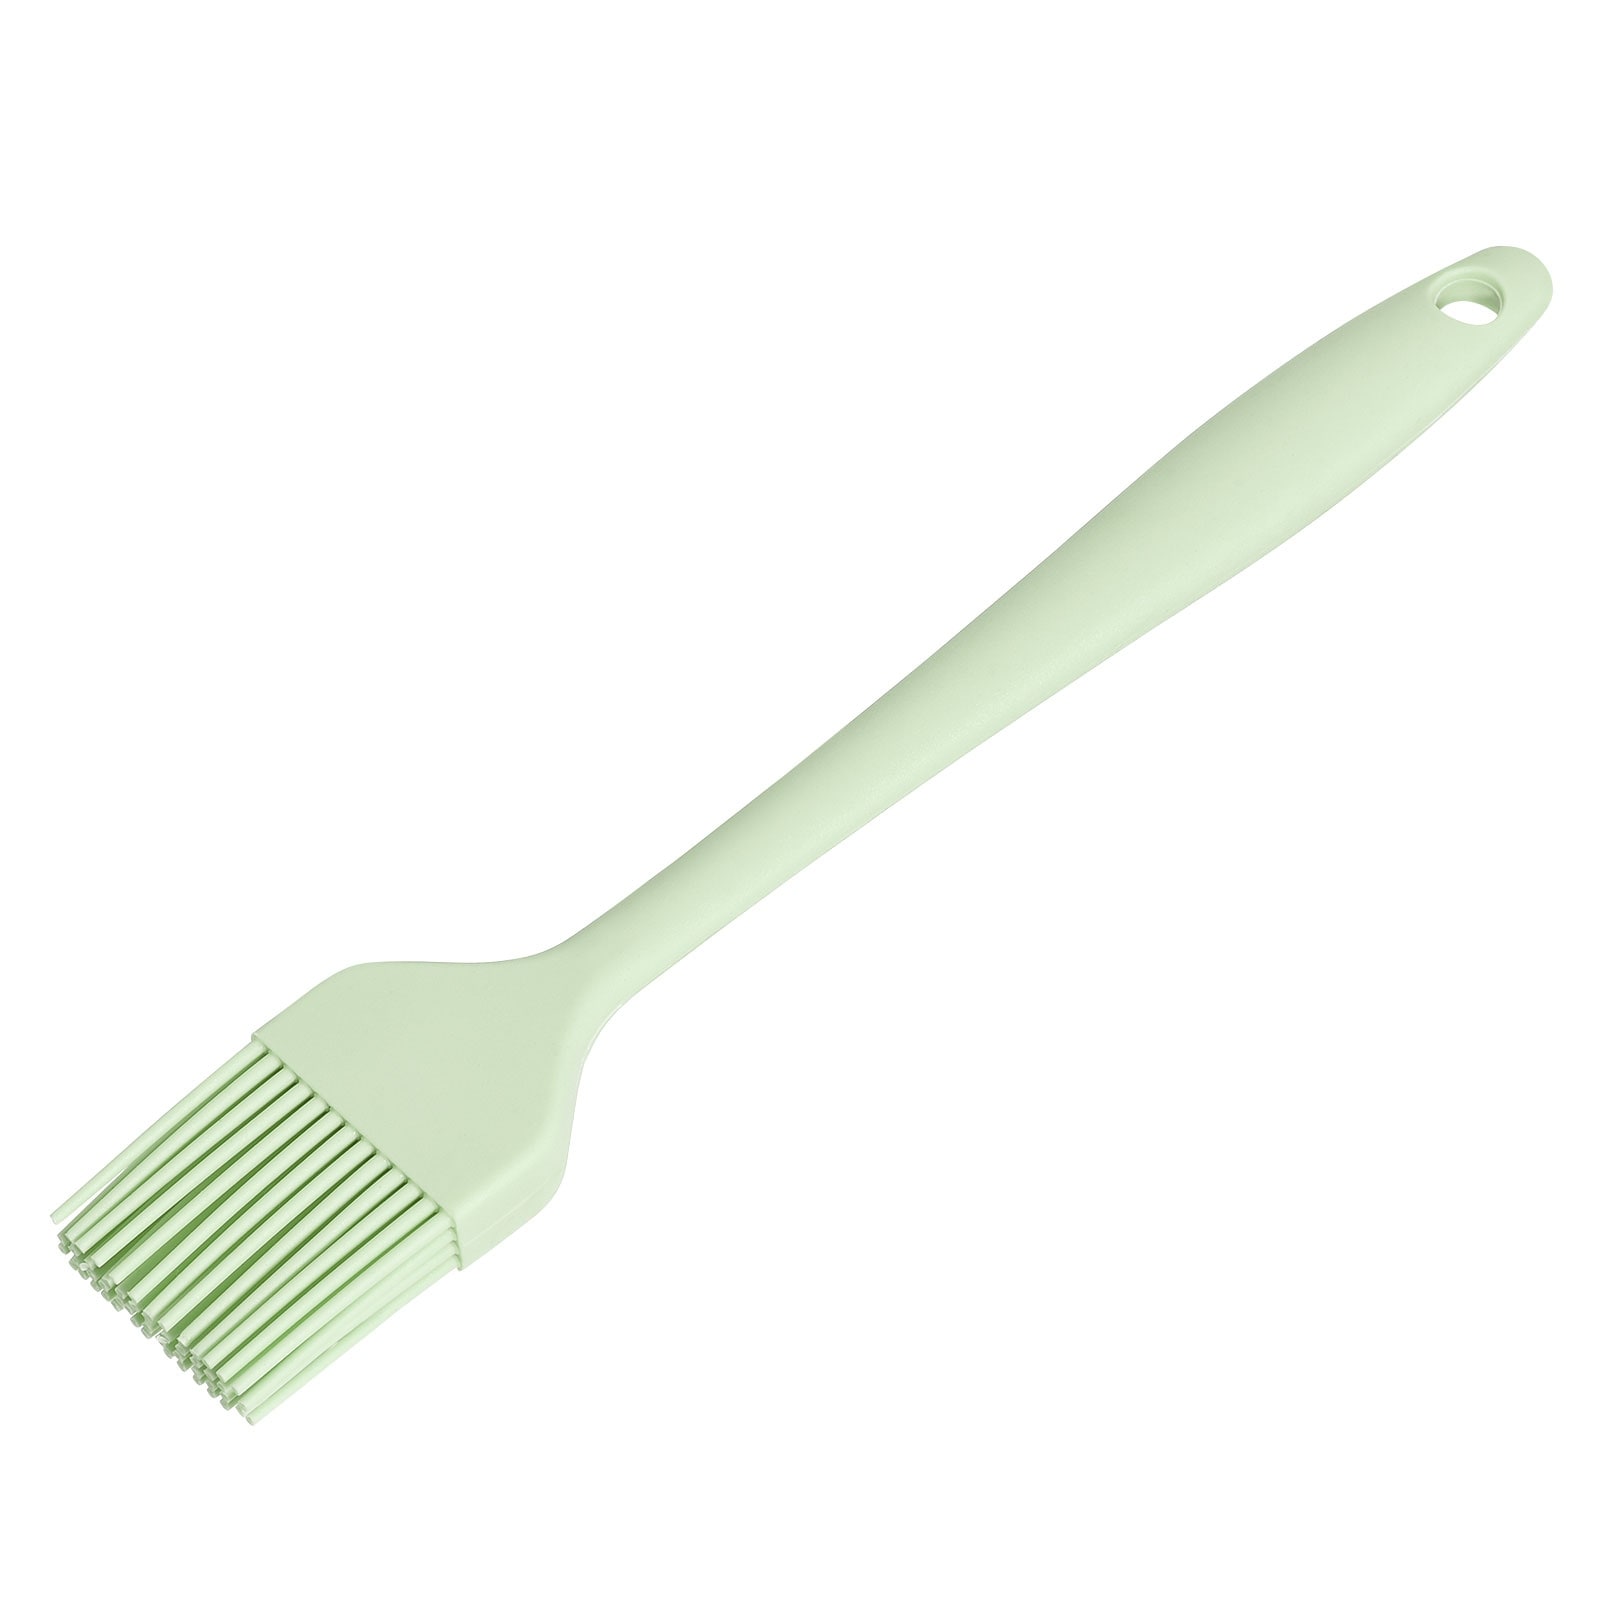 Basting Pastry Brush, 8undefined Silicone Flexible Brushes for